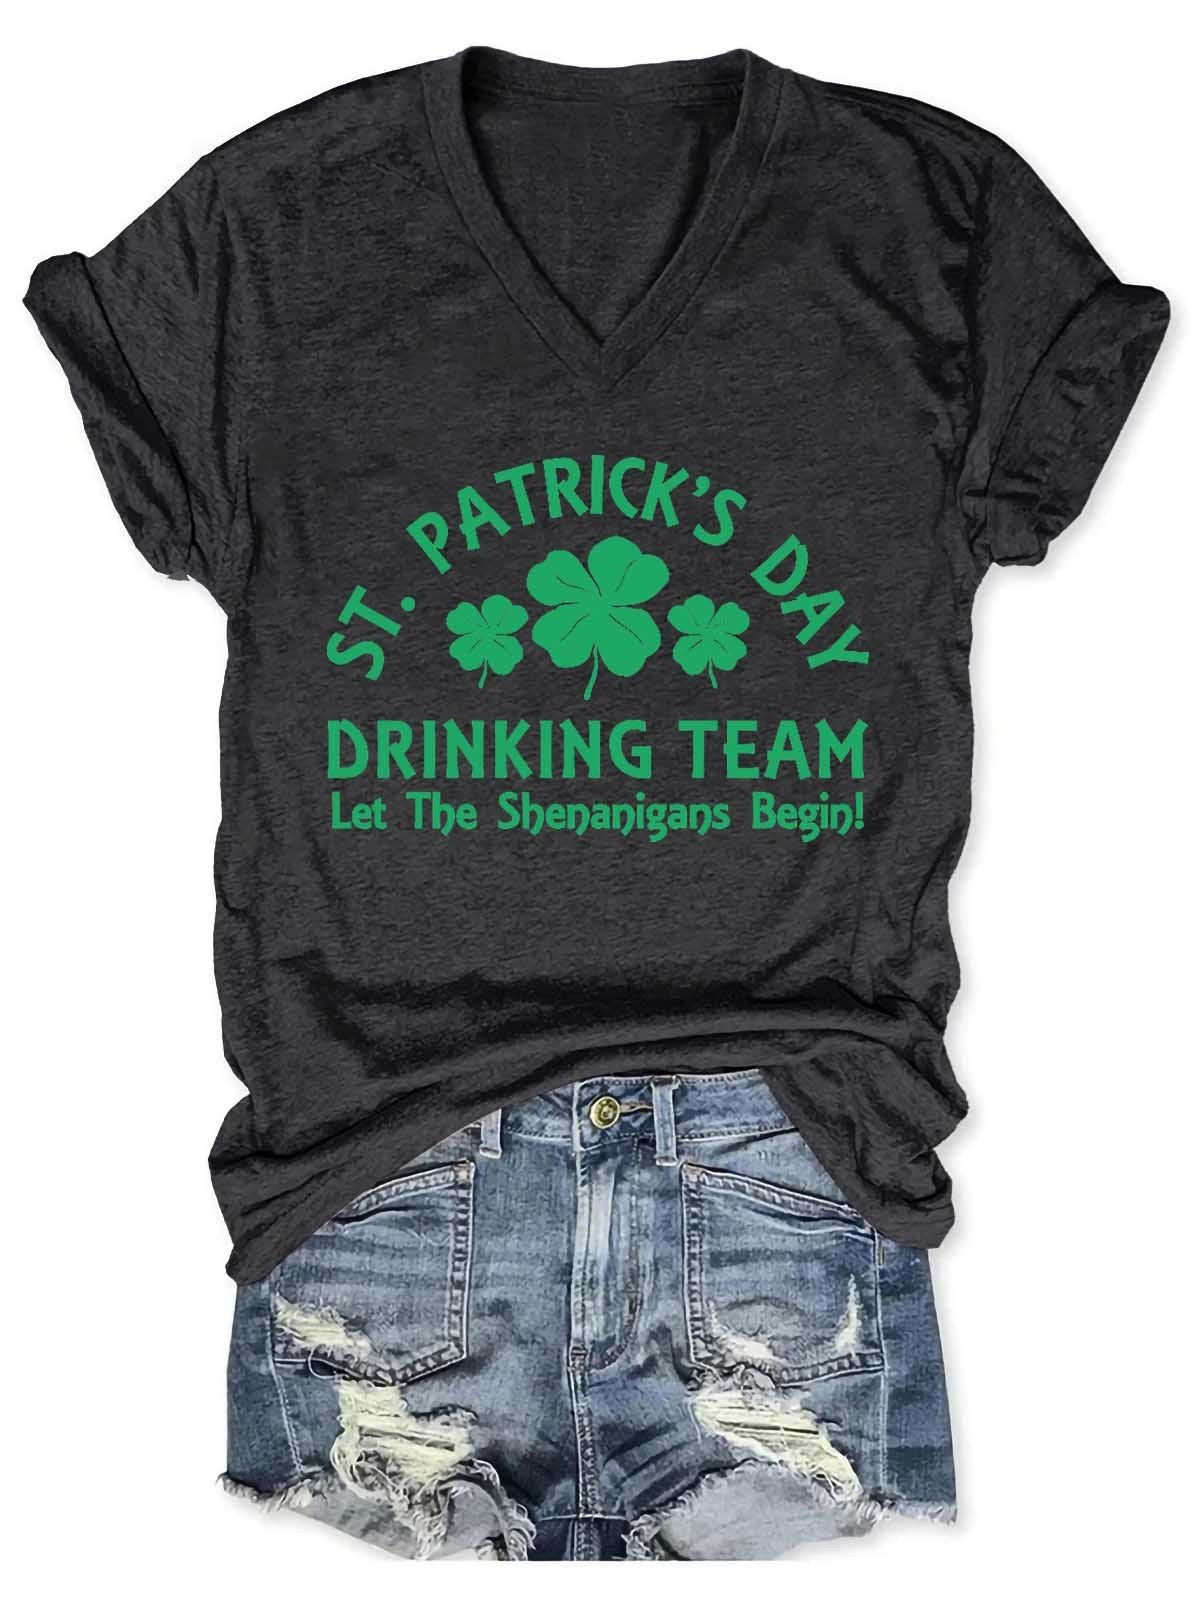 Women's Drinking Team St. Patrick's Day V-Neck T-Shirt - Outlets Forever